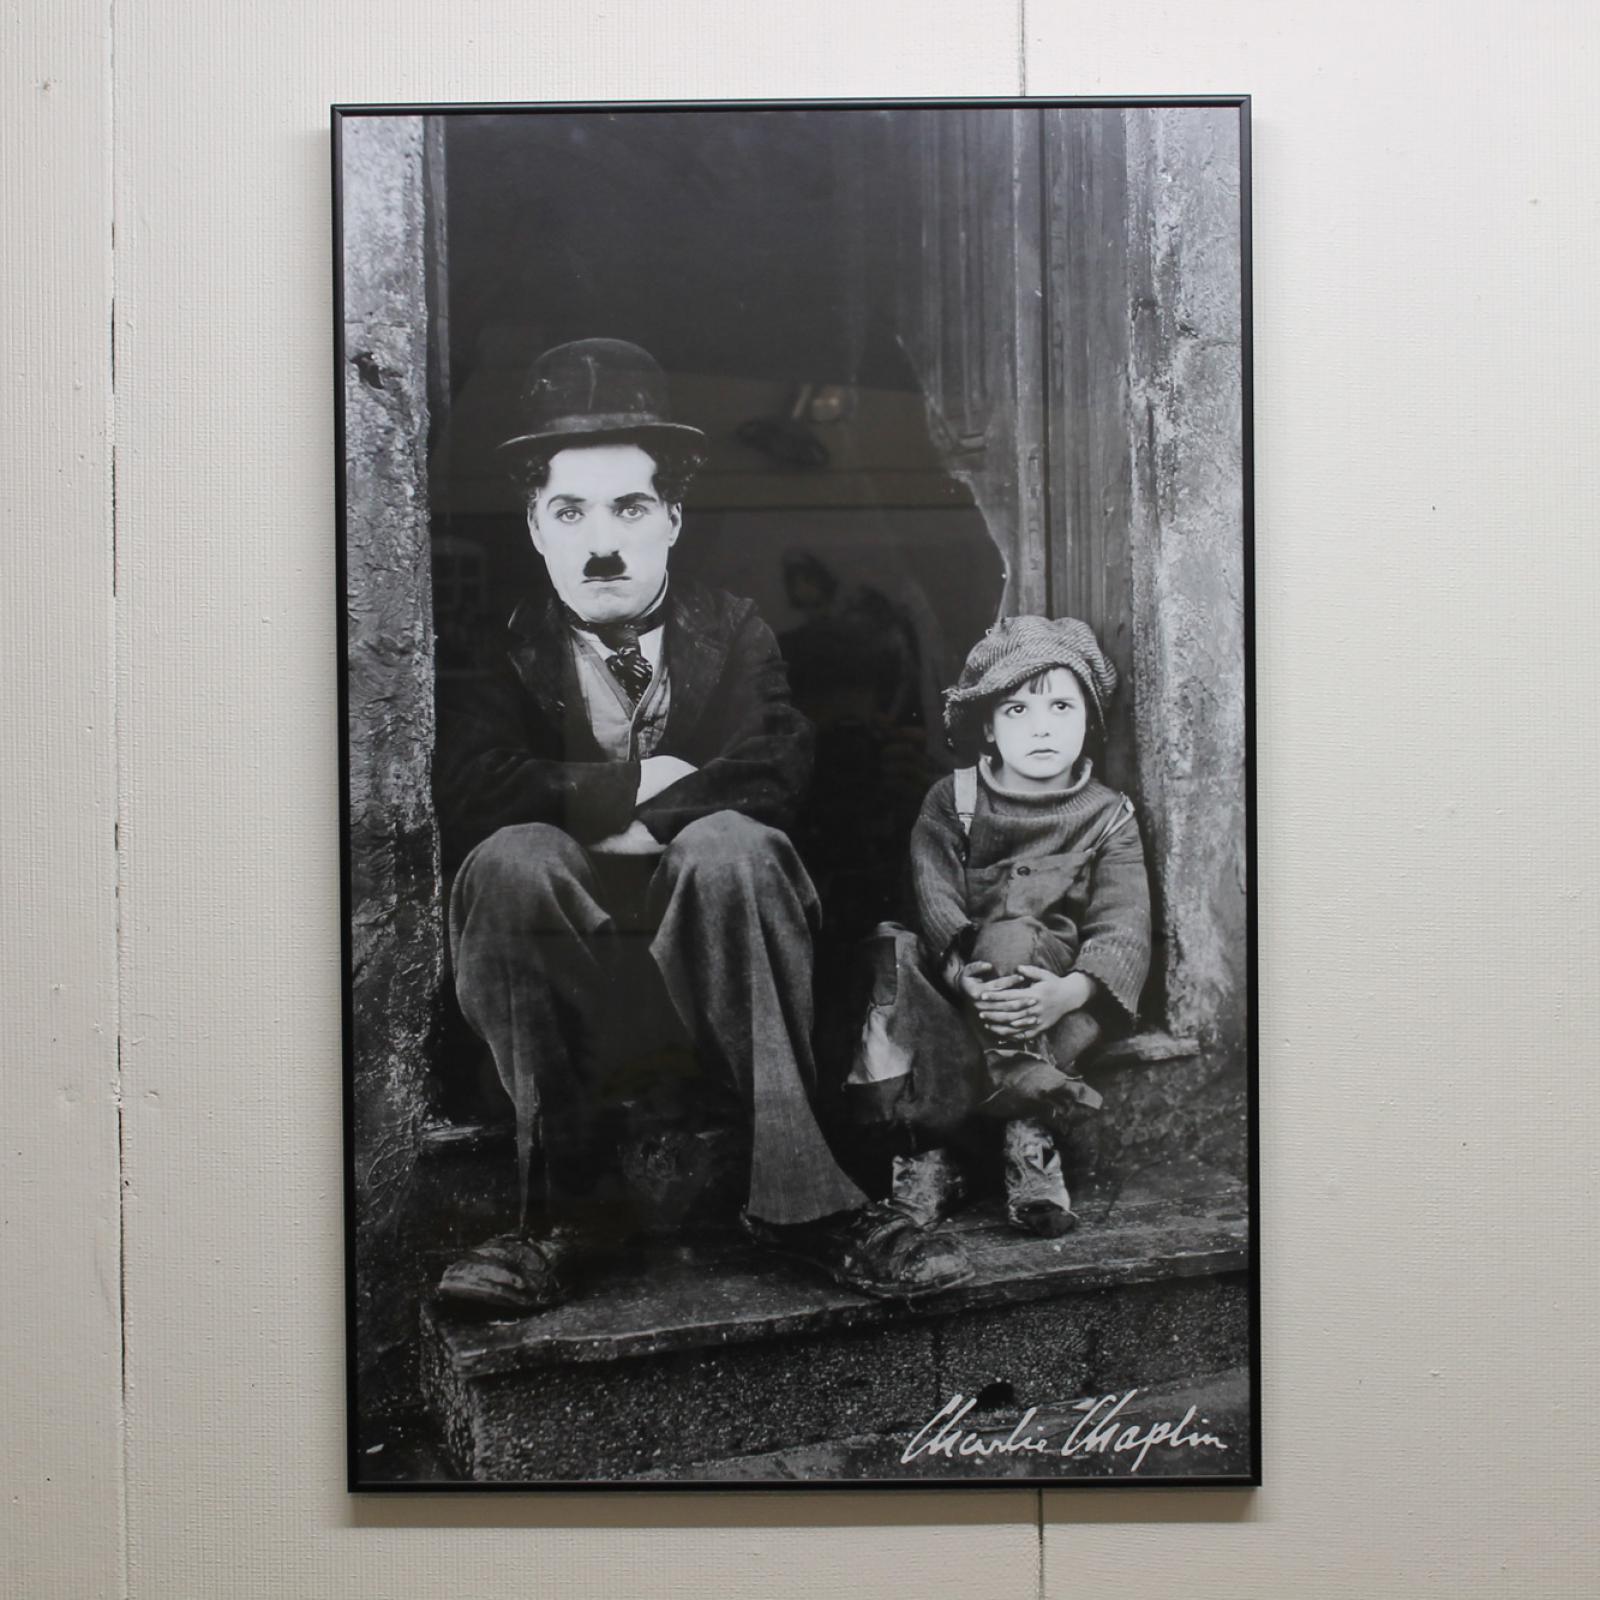 Charlie Chaplin The Kid